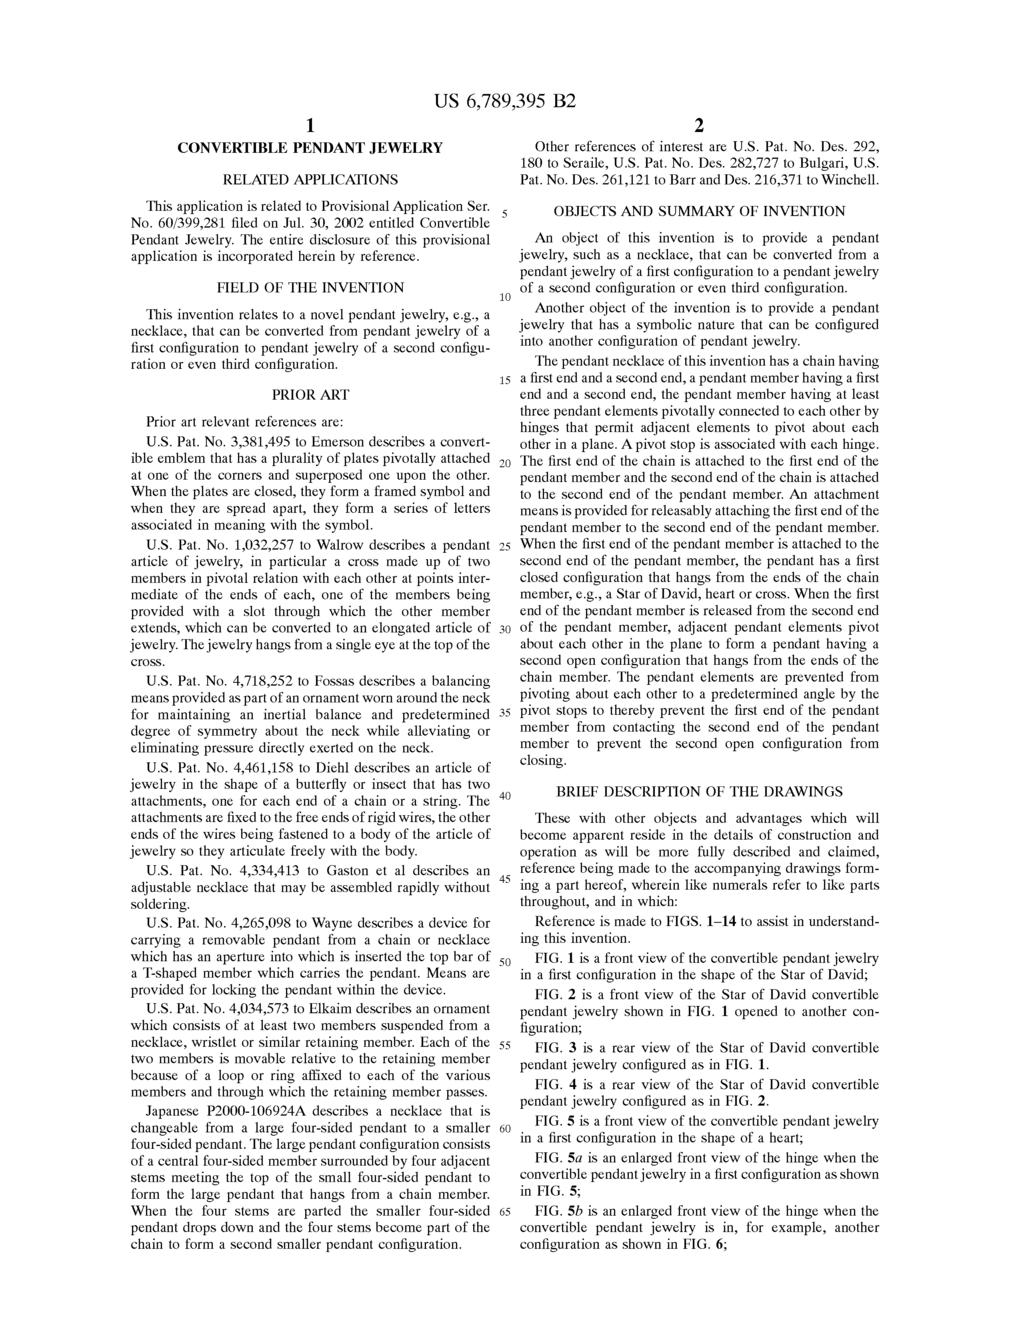 Case 1:07-cv-06216-GEL Document